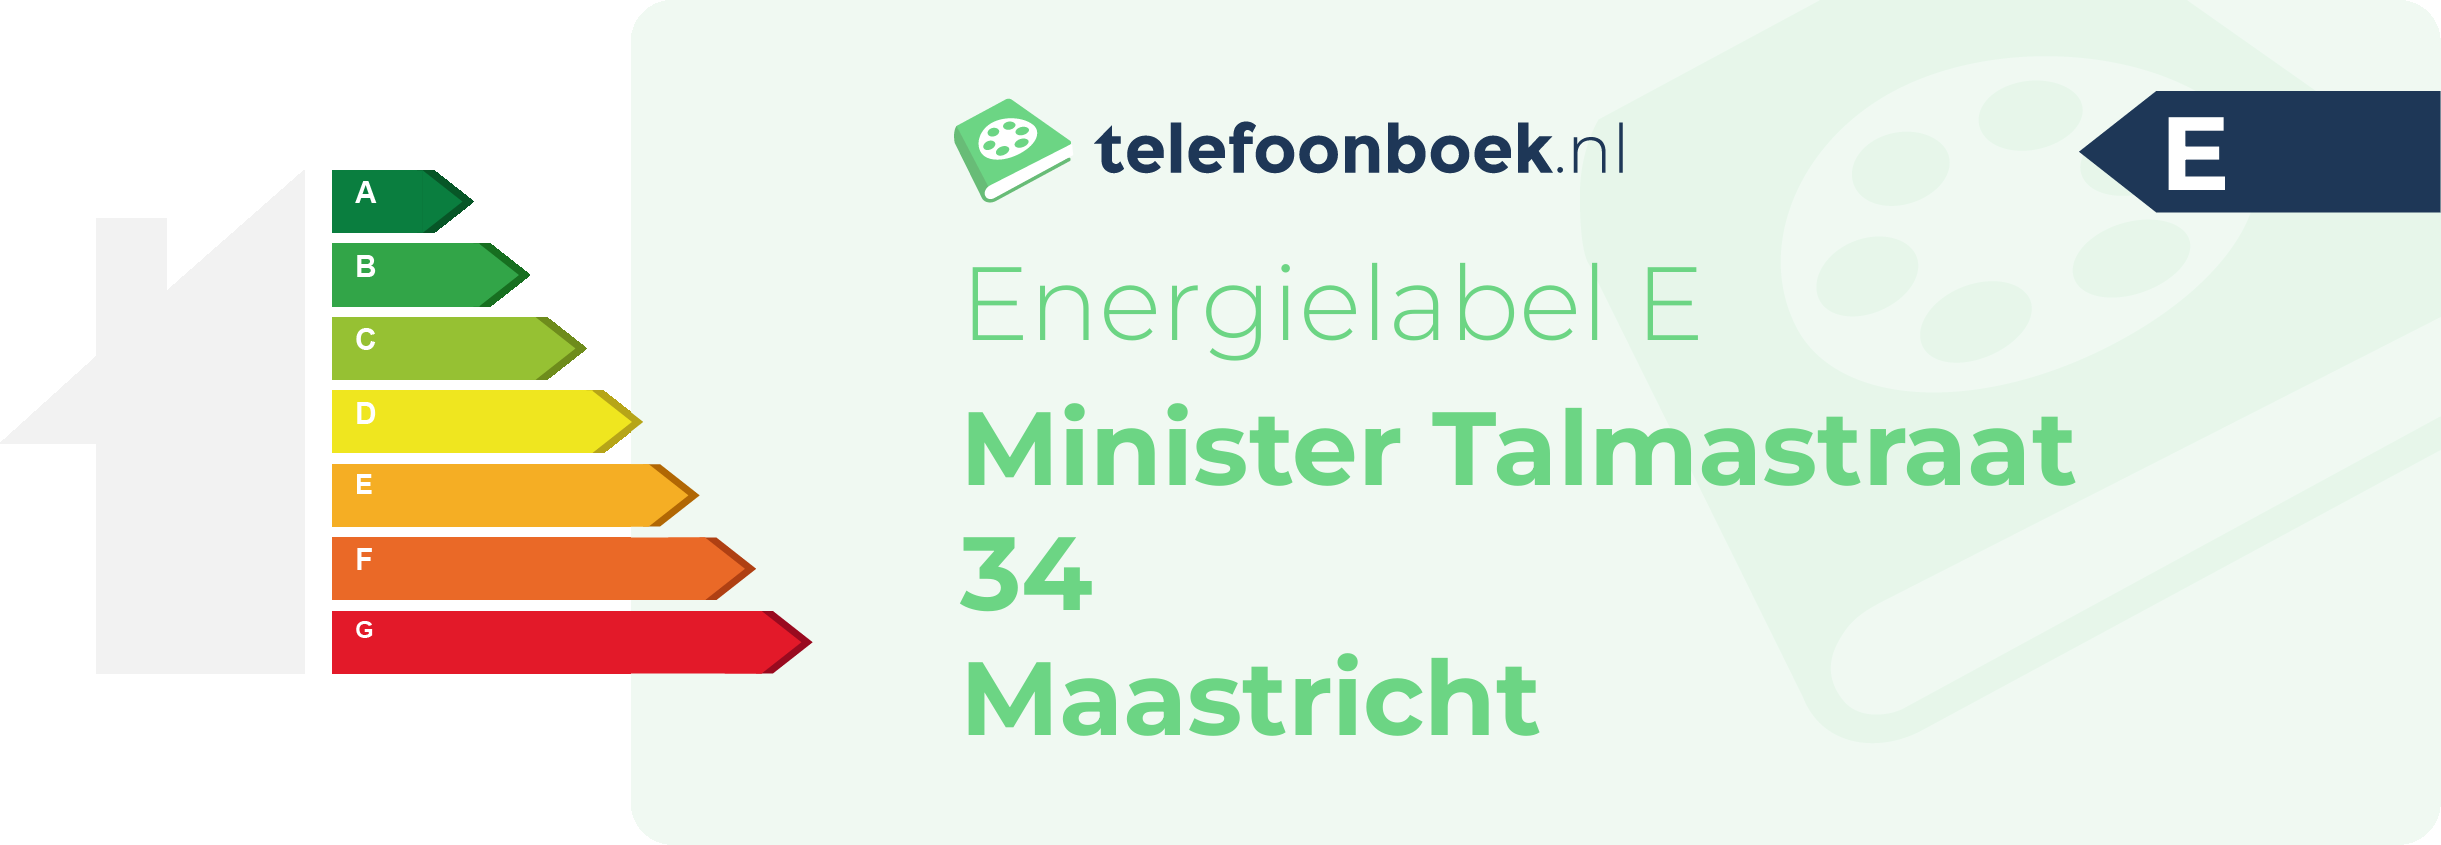 Energielabel Minister Talmastraat 34 Maastricht